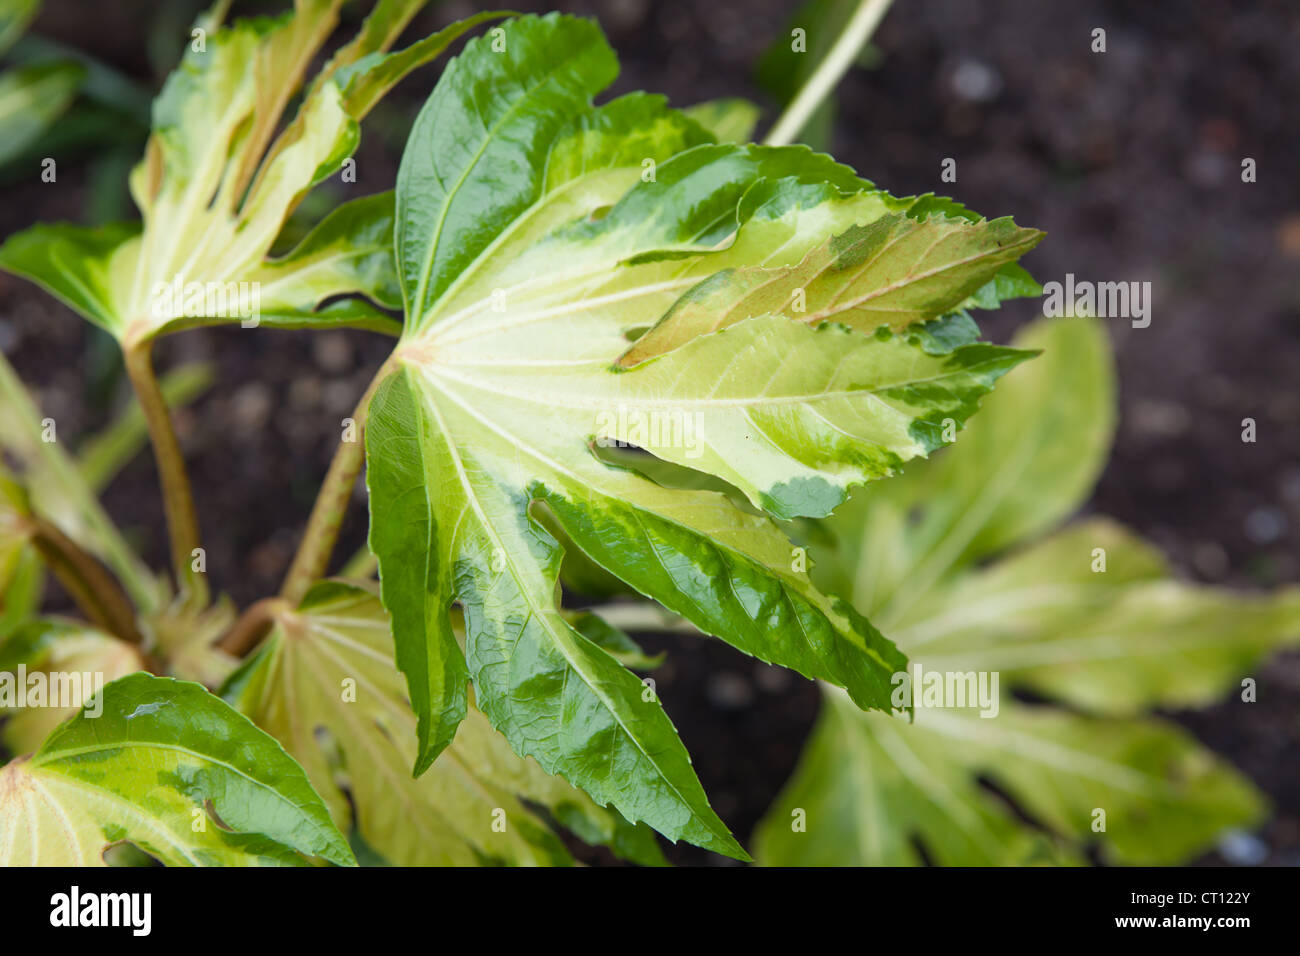 Fatsia japonica 'Variegata' Leaf detail Stock Photo